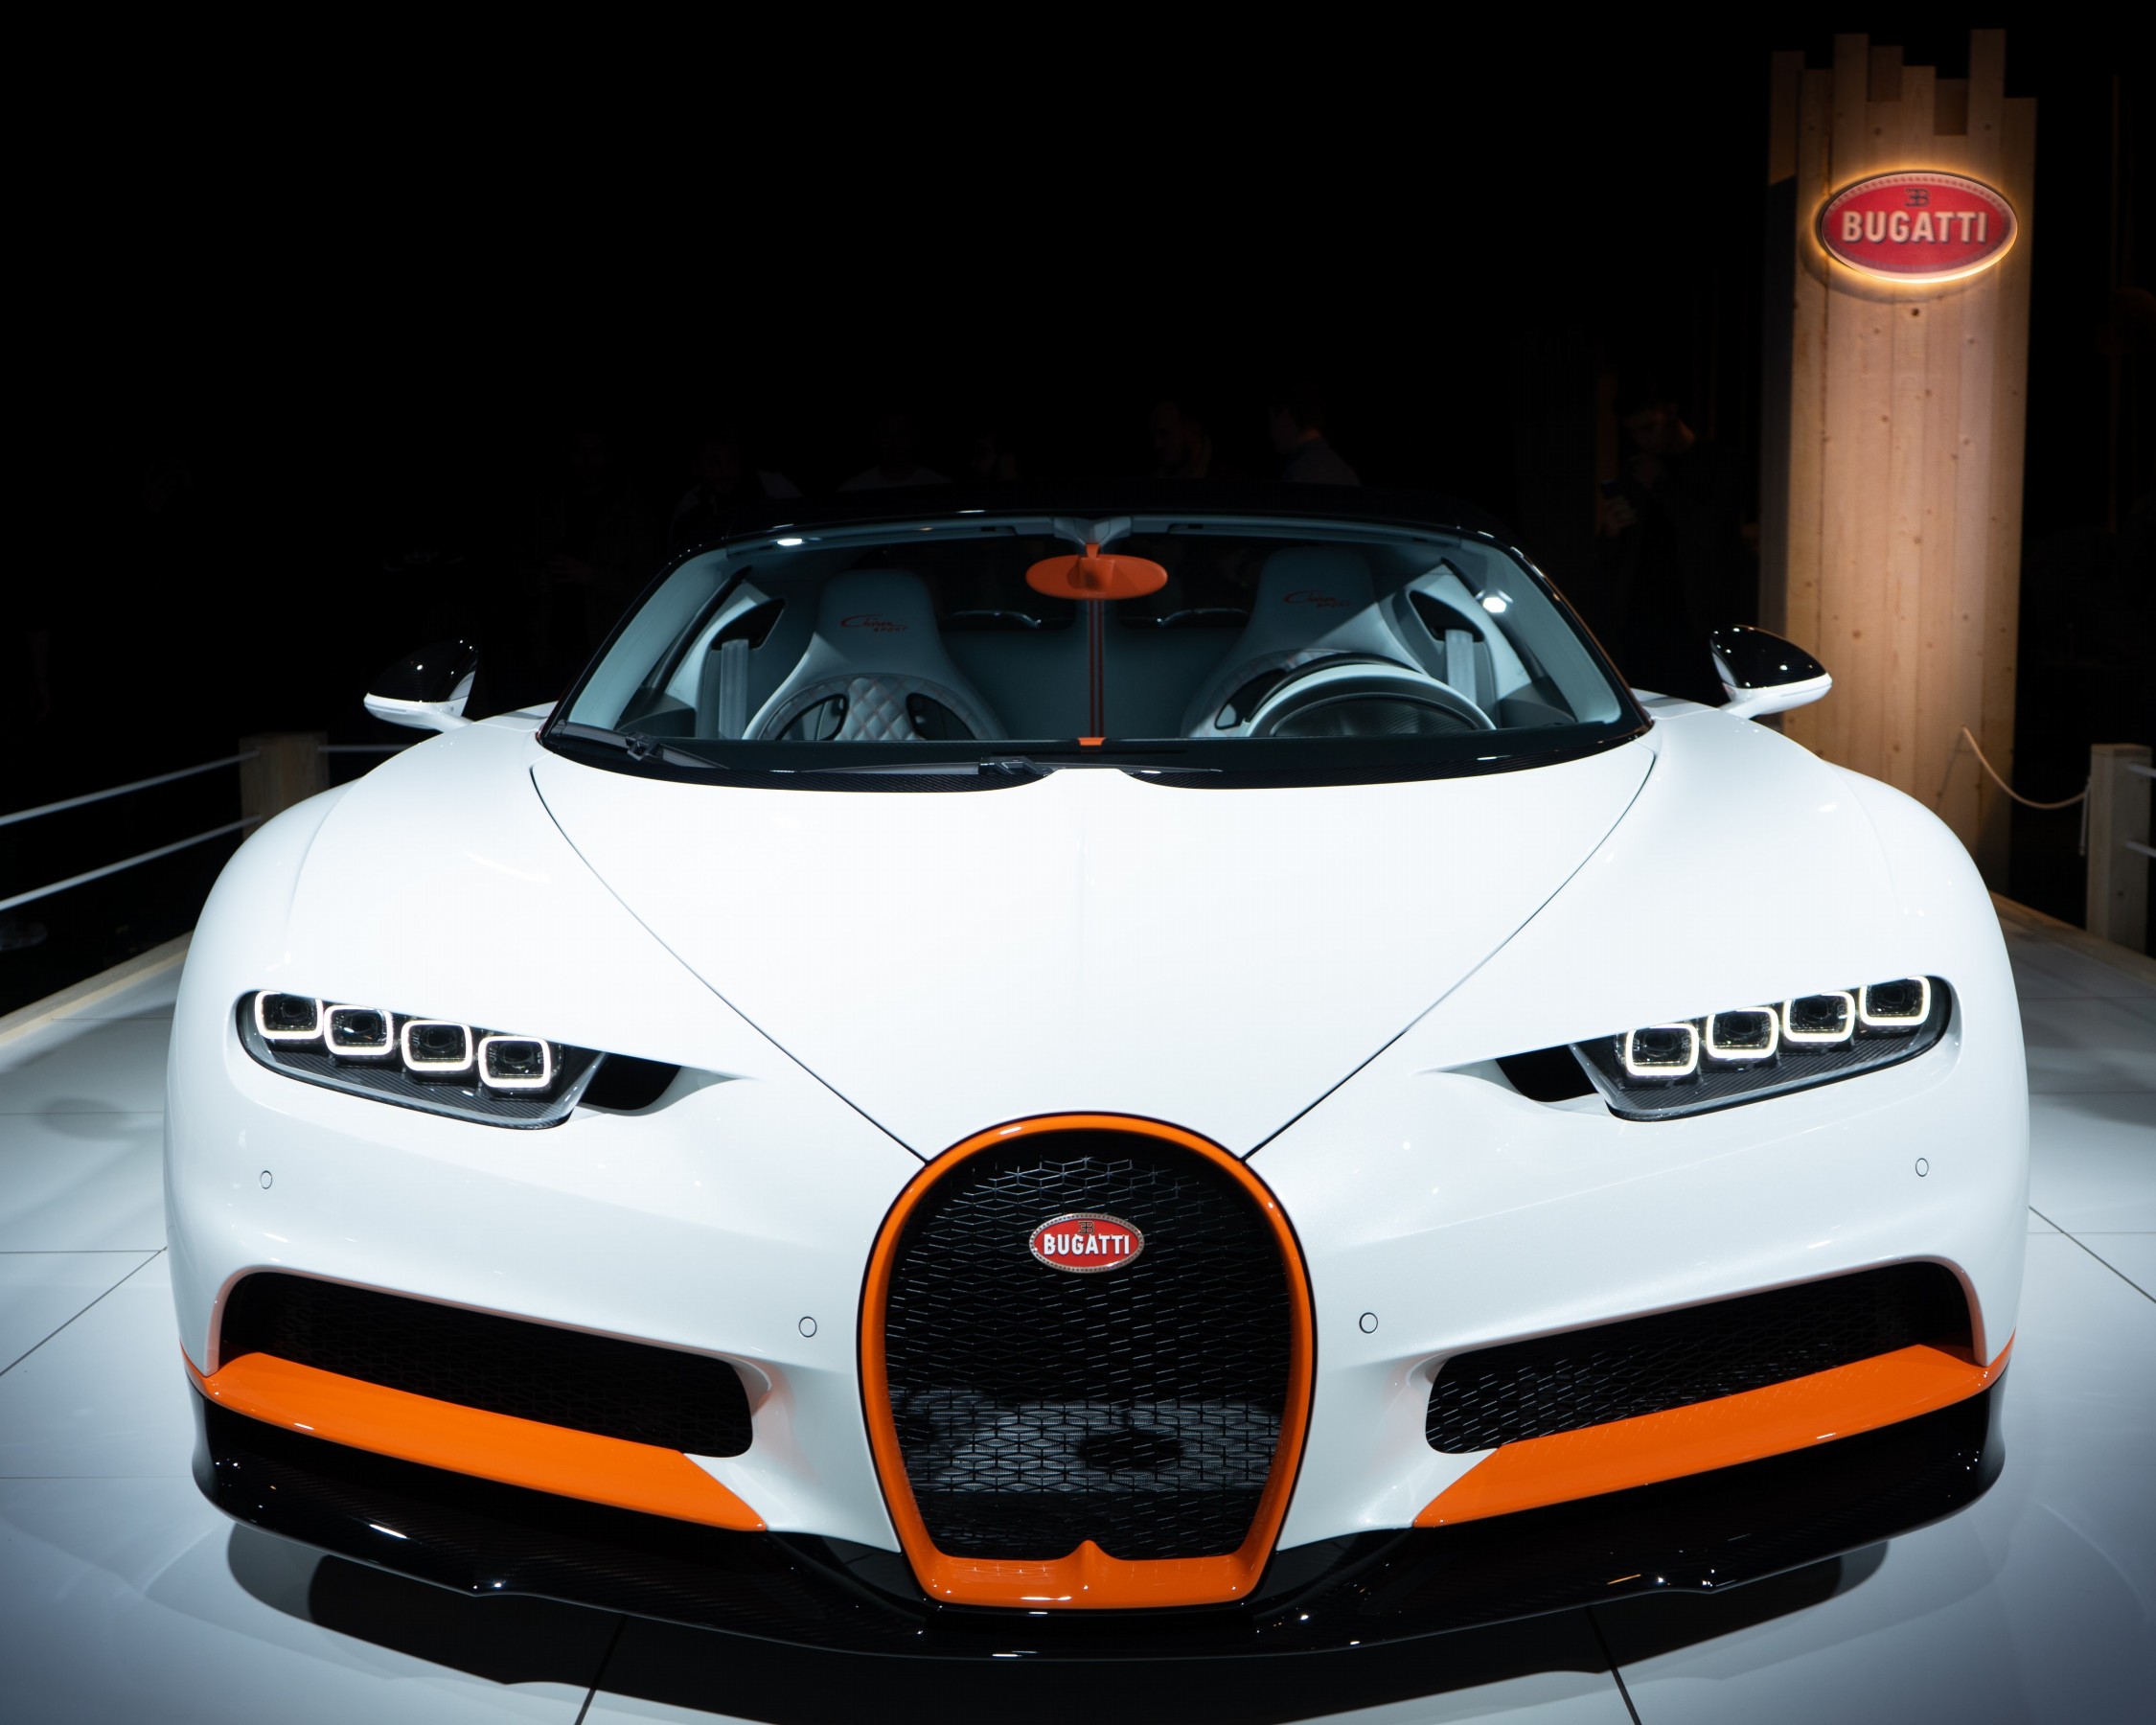 Price of Bugatti Veyron in Nigeria